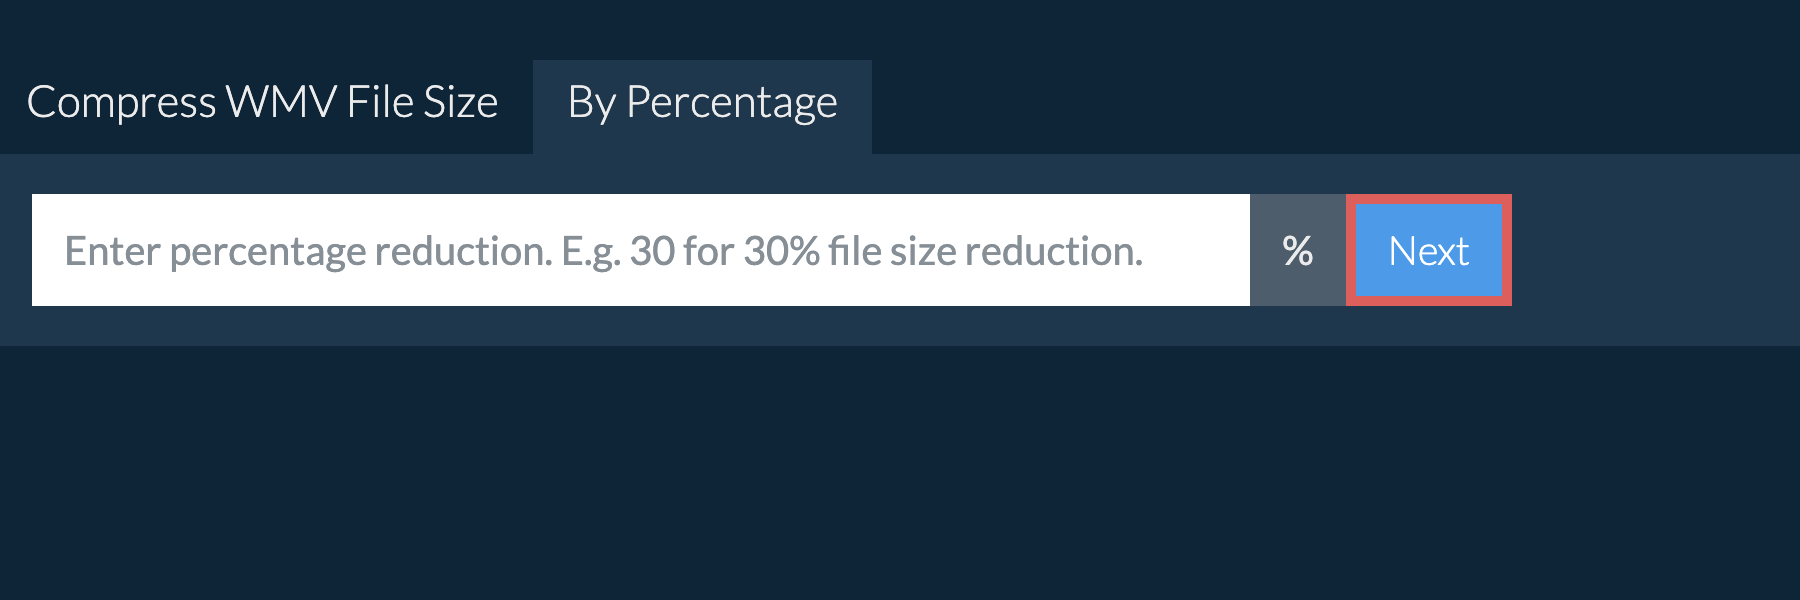 Reduce wmv By Percentage